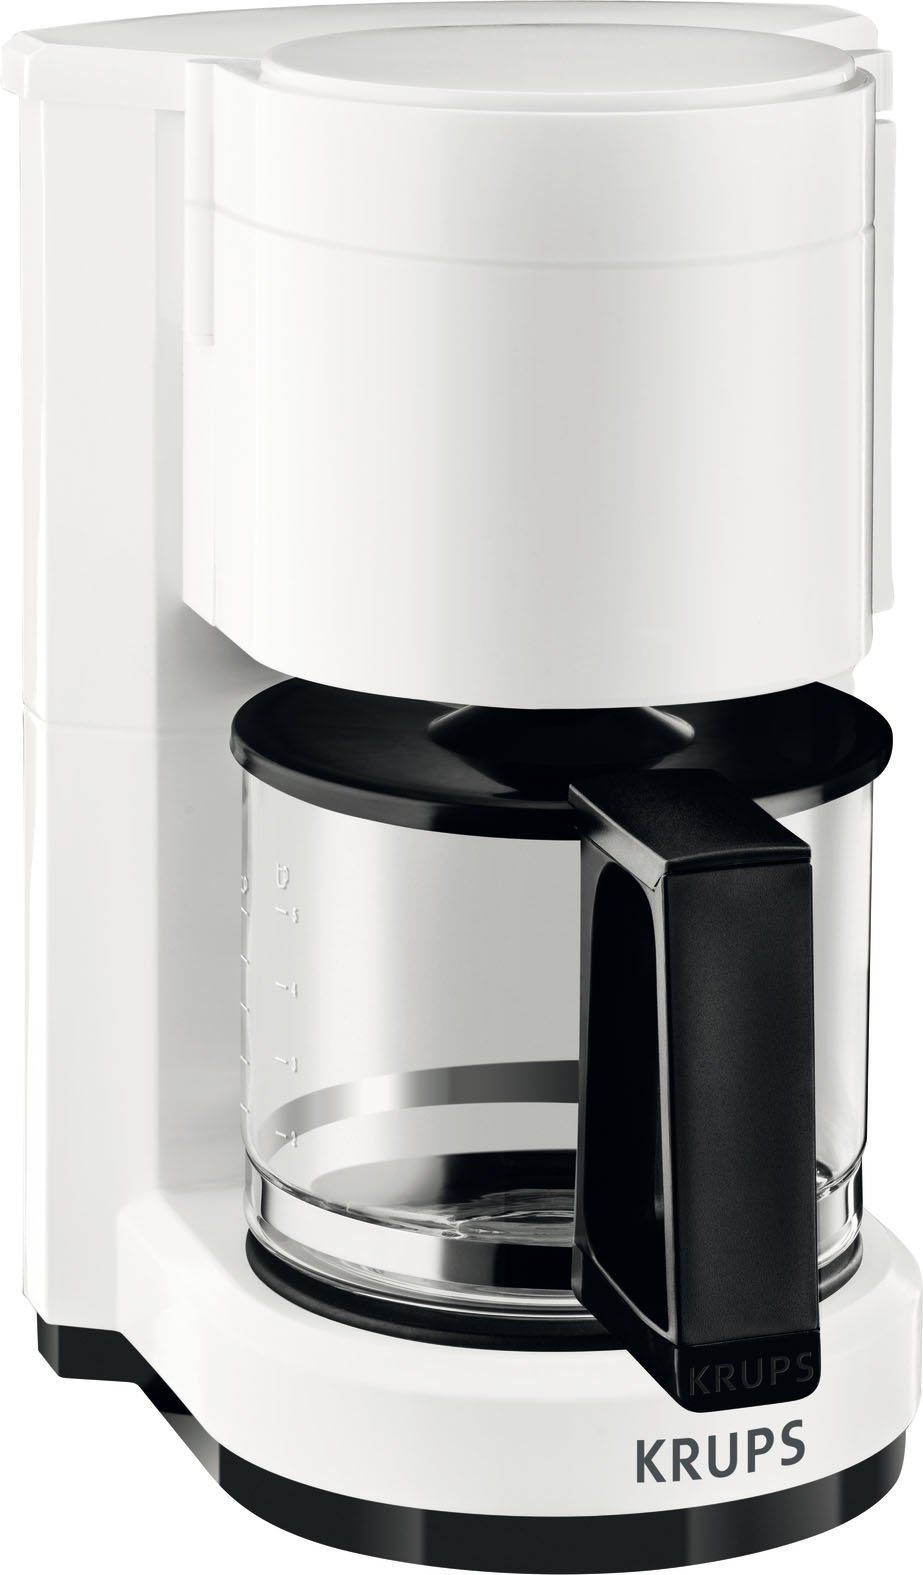 Krups Filterkaffeemaschine F18301 Aromacafe, 0,6l Kaffeekanne online kaufen  | OTTO